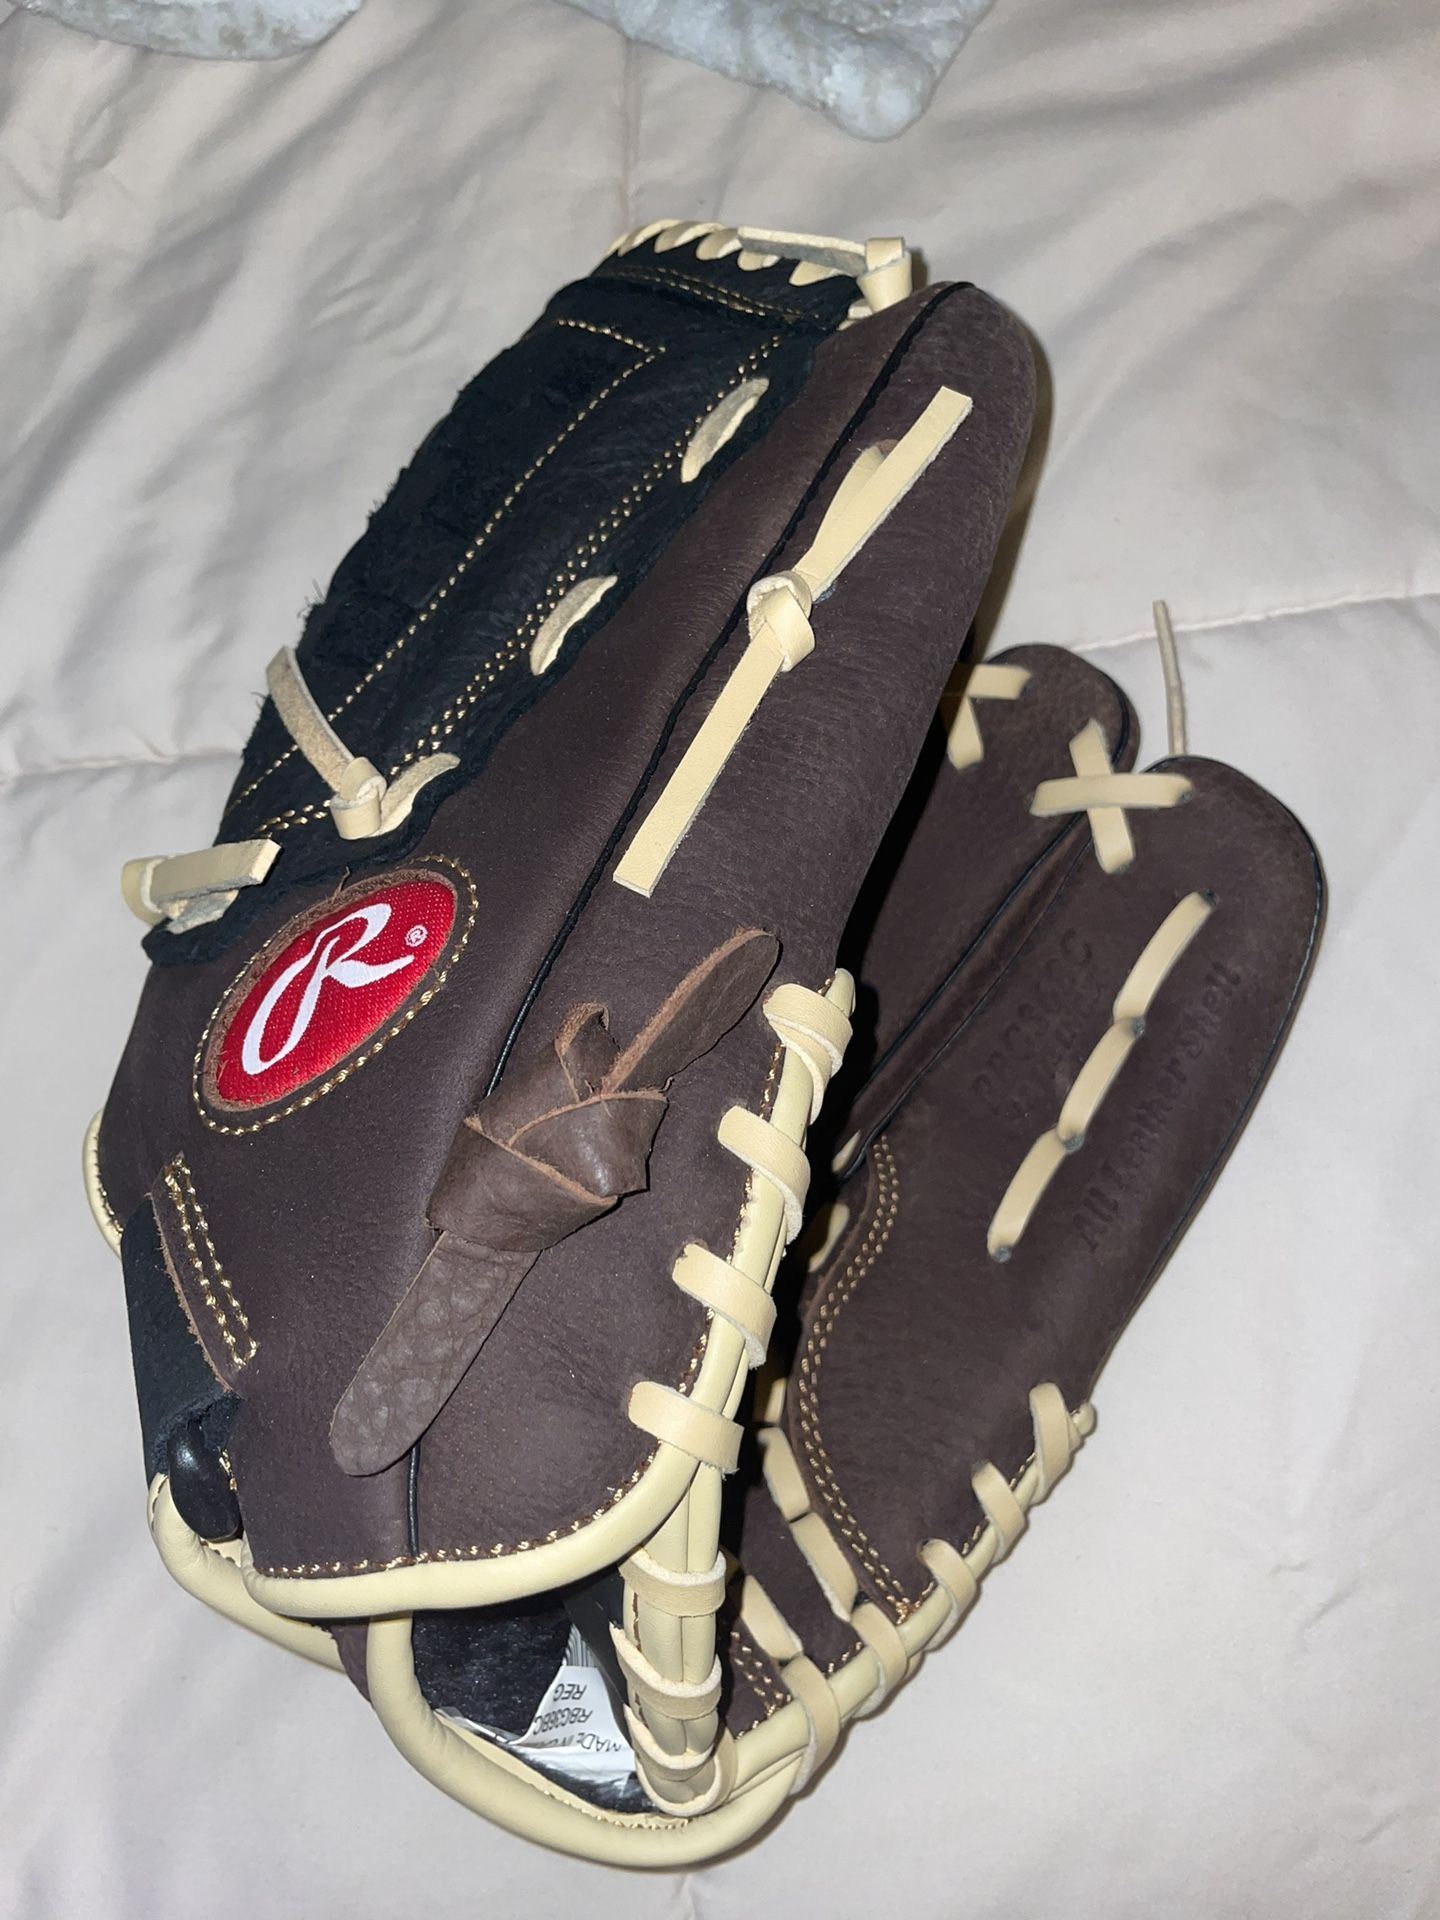 Brand New Never Used Rawlings Baseball Glove 